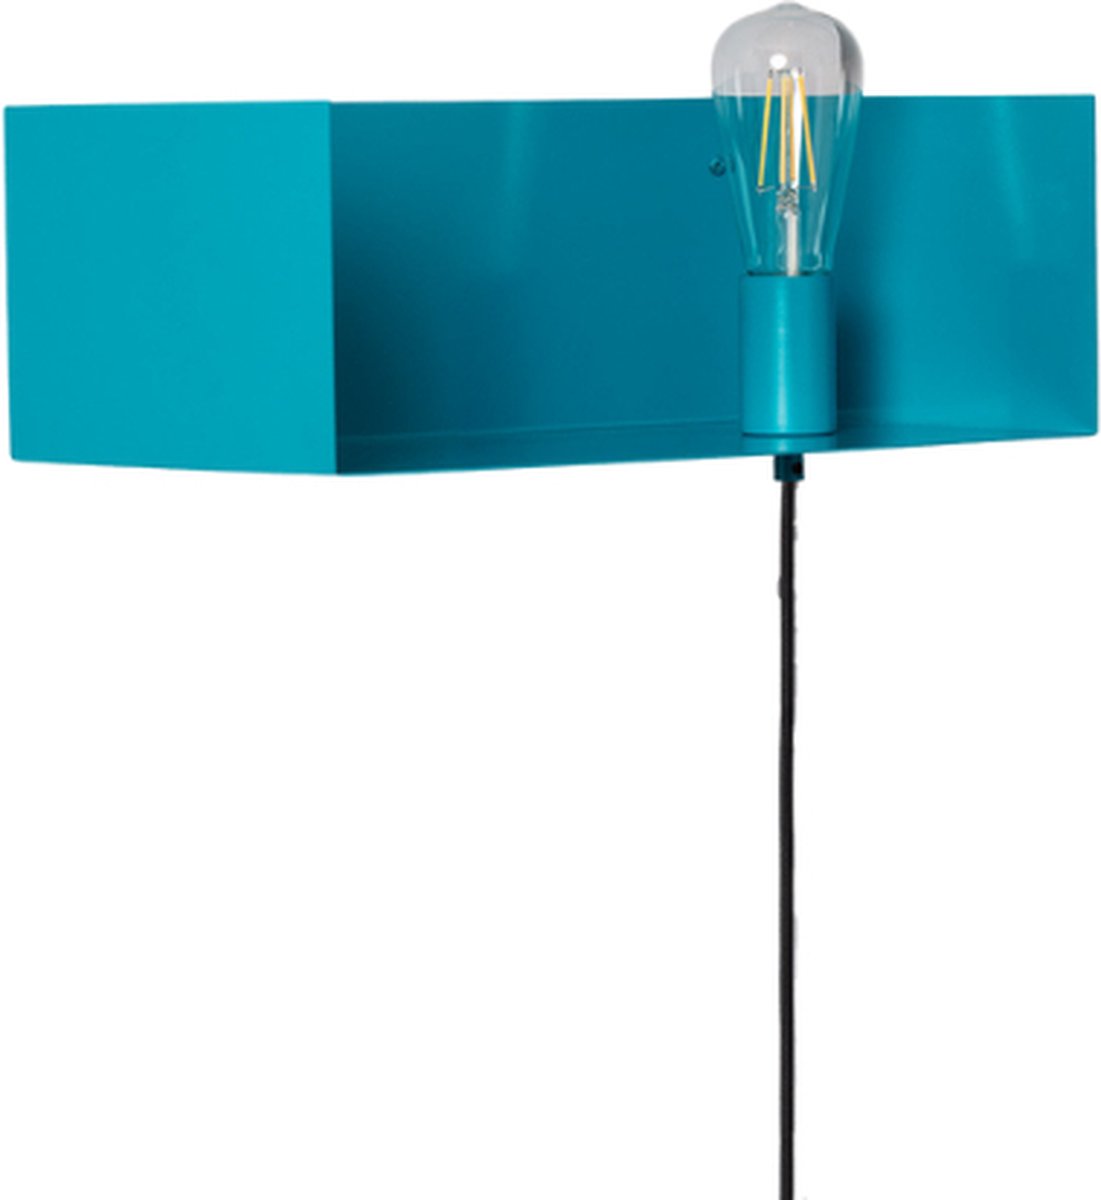 Bussandri - Moderne Wandlamp - Metaal - Modern - E27 - L:20cm - Voor Binnen - Woonkamer - Eetkamer - Slaapkamer - Wandlampen - Blauw